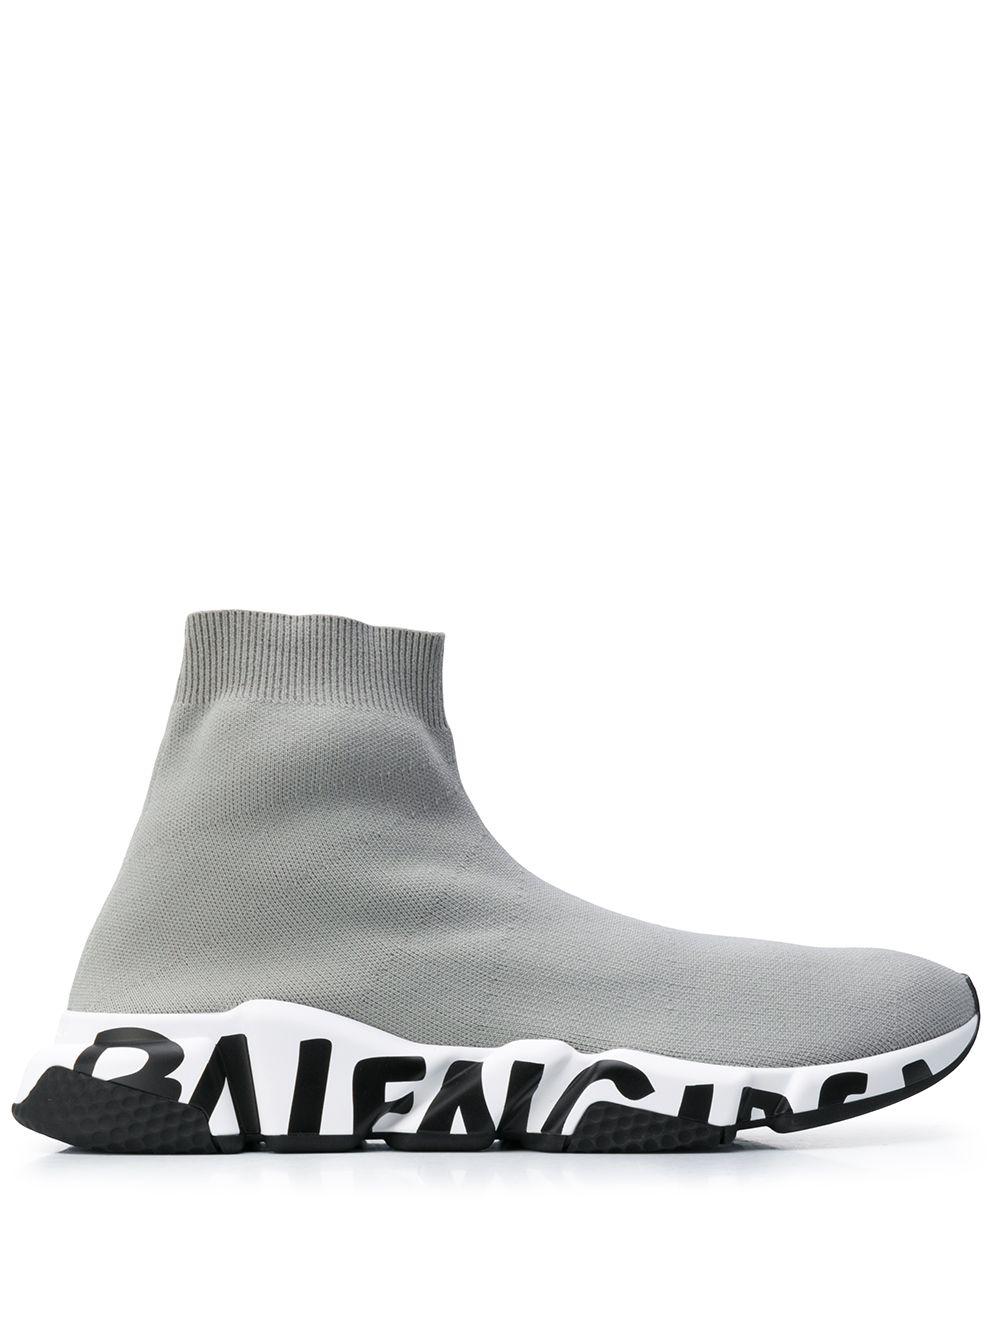 Balenciaga Speed Graffiti Sneakers in Grey (Gray) for Men - Lyst